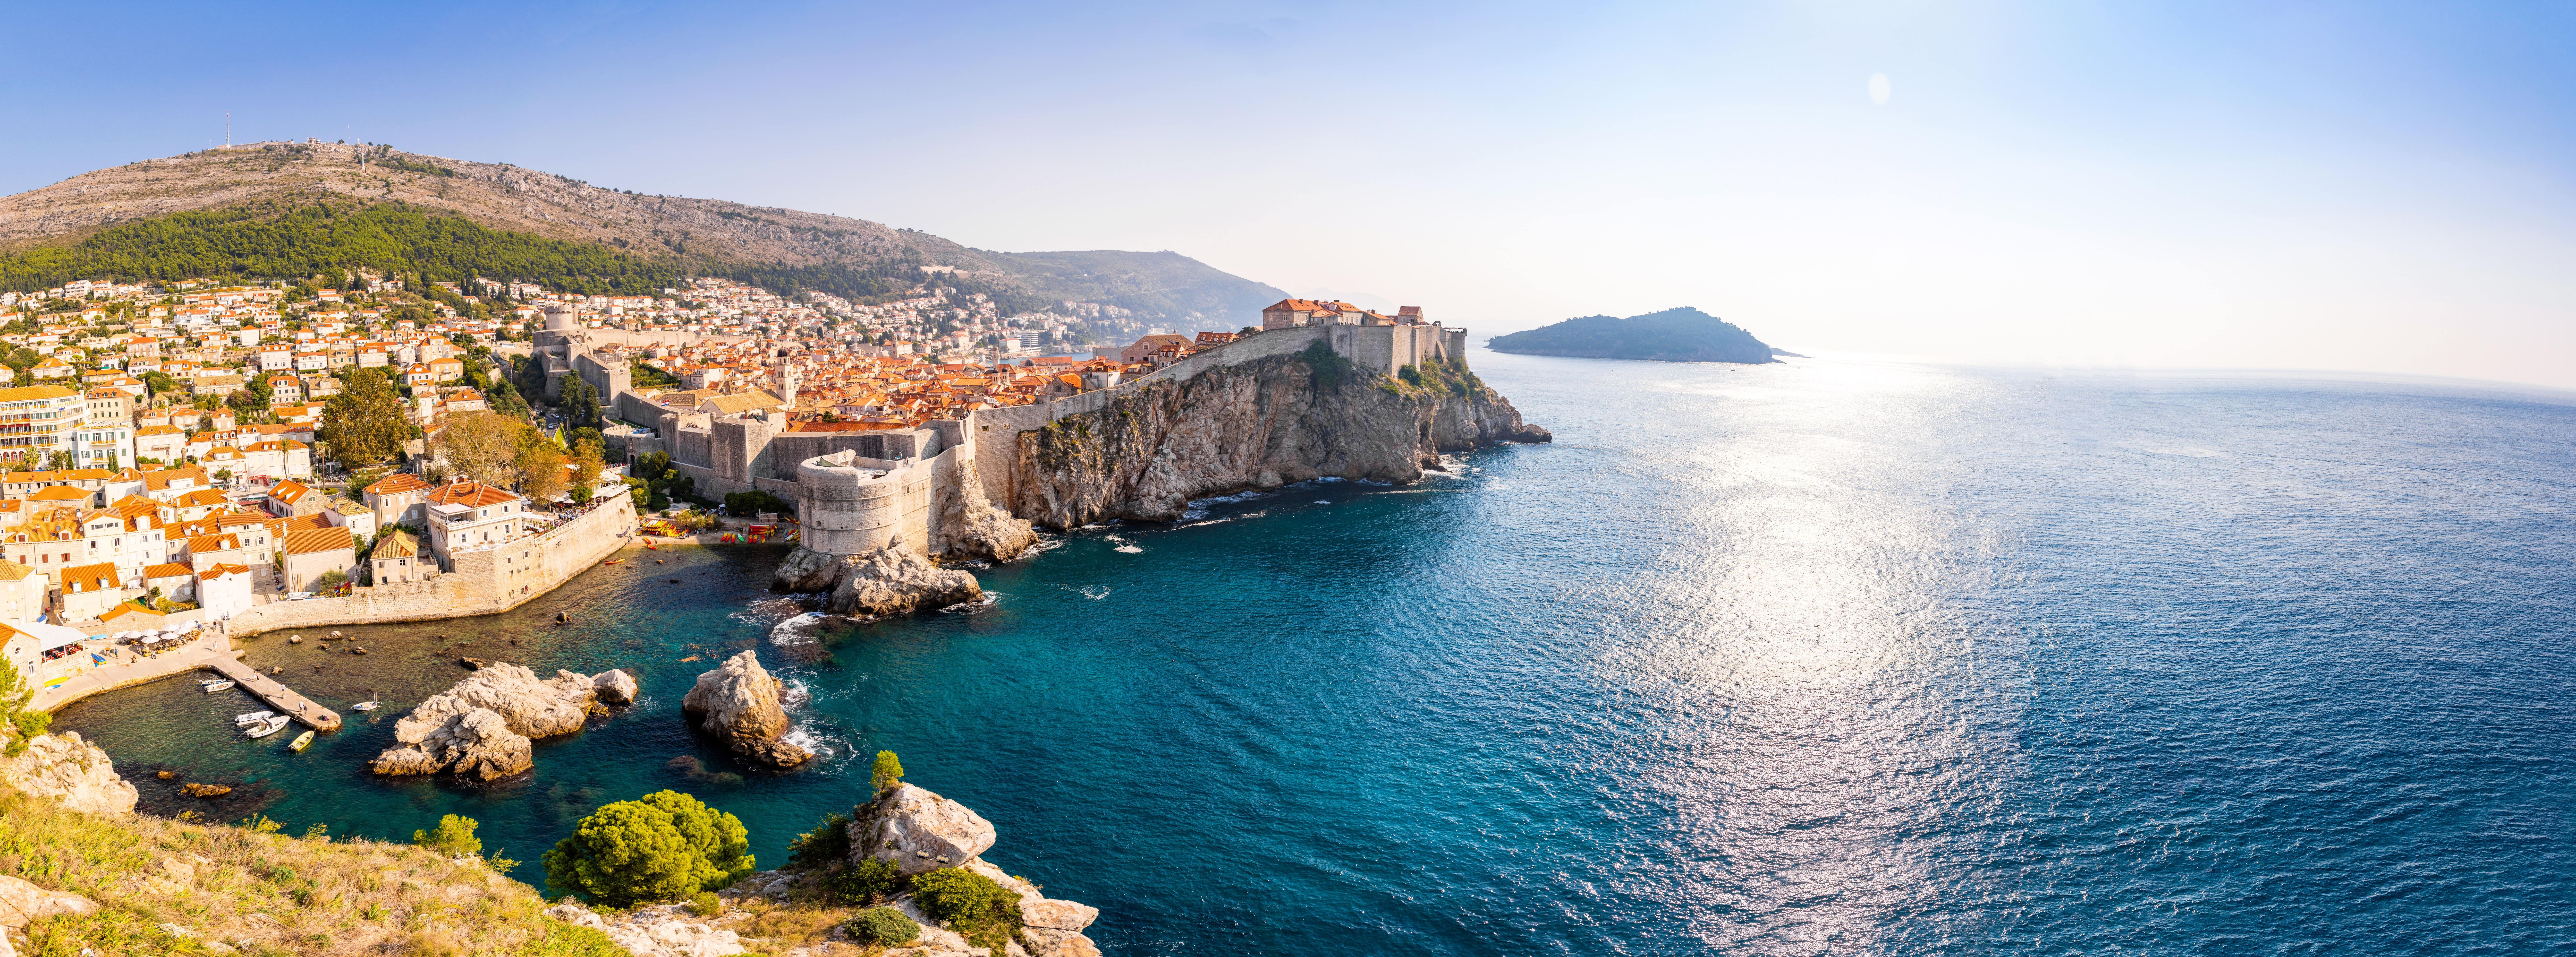 the Bay of Kotor plus Dubrovnik